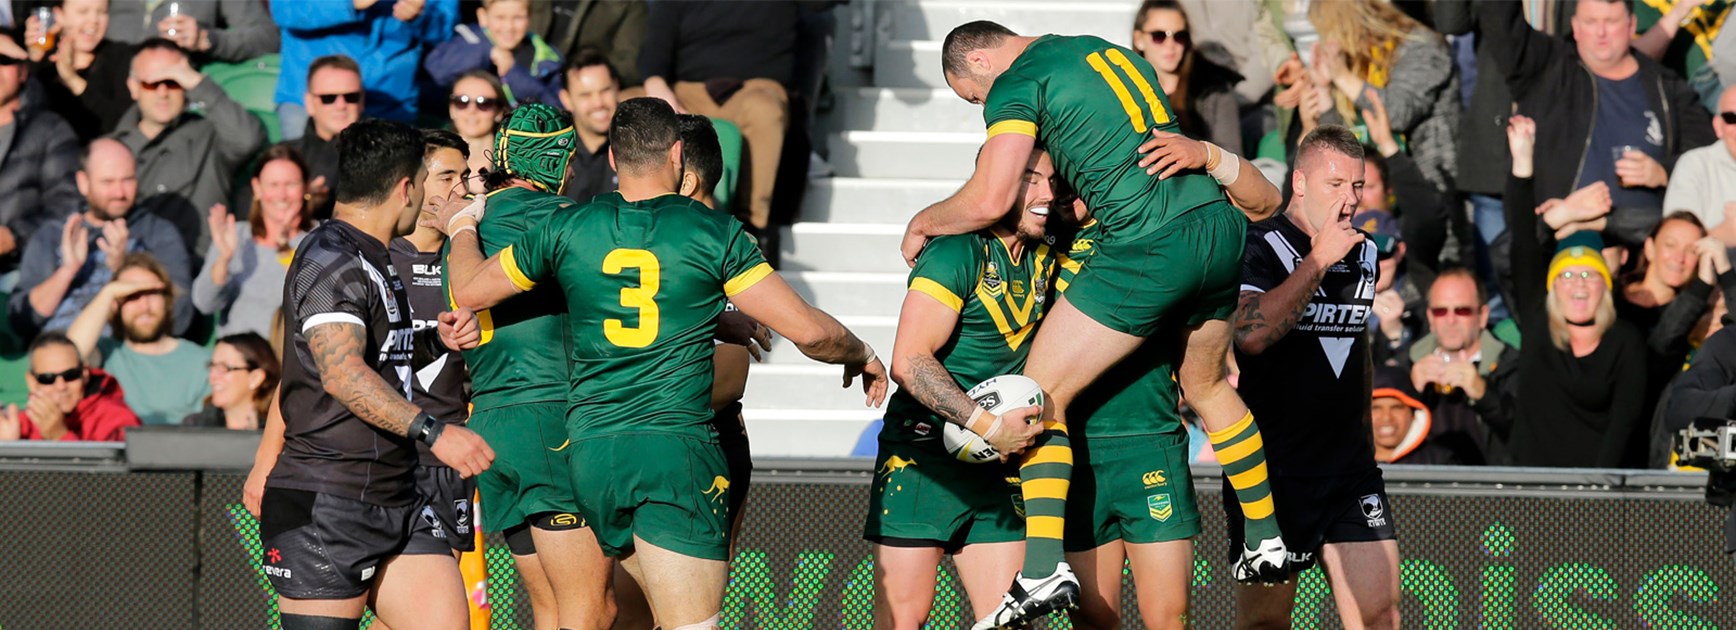 The Kangaroos celebrate Darius Boyd's opening try against New Zealand on Saturday.